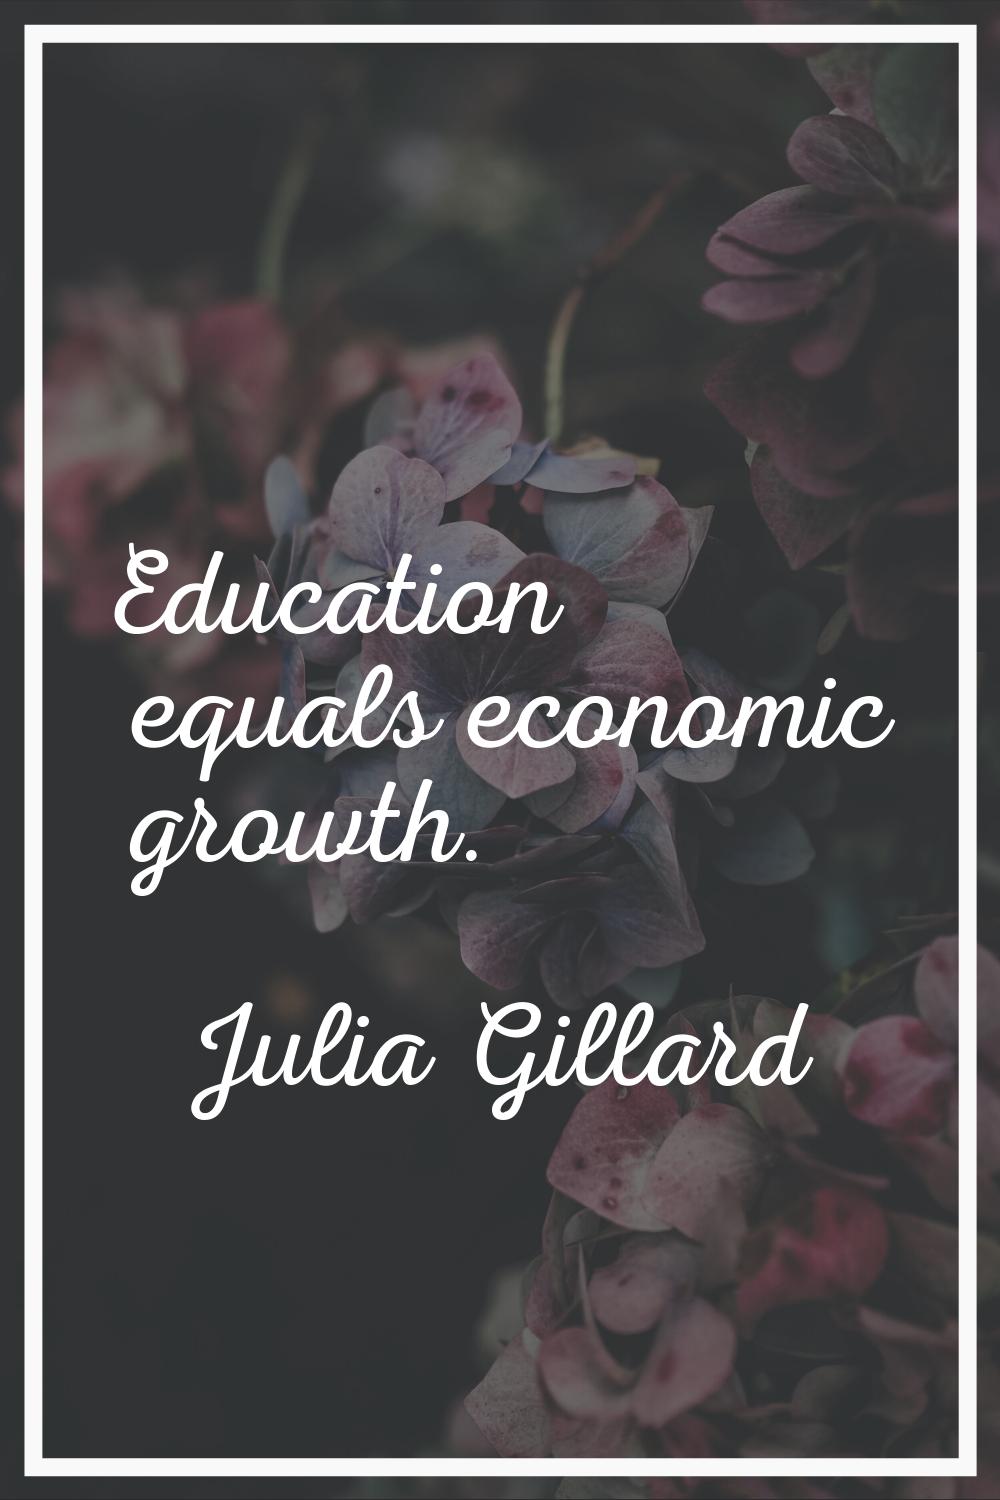 Education equals economic growth.